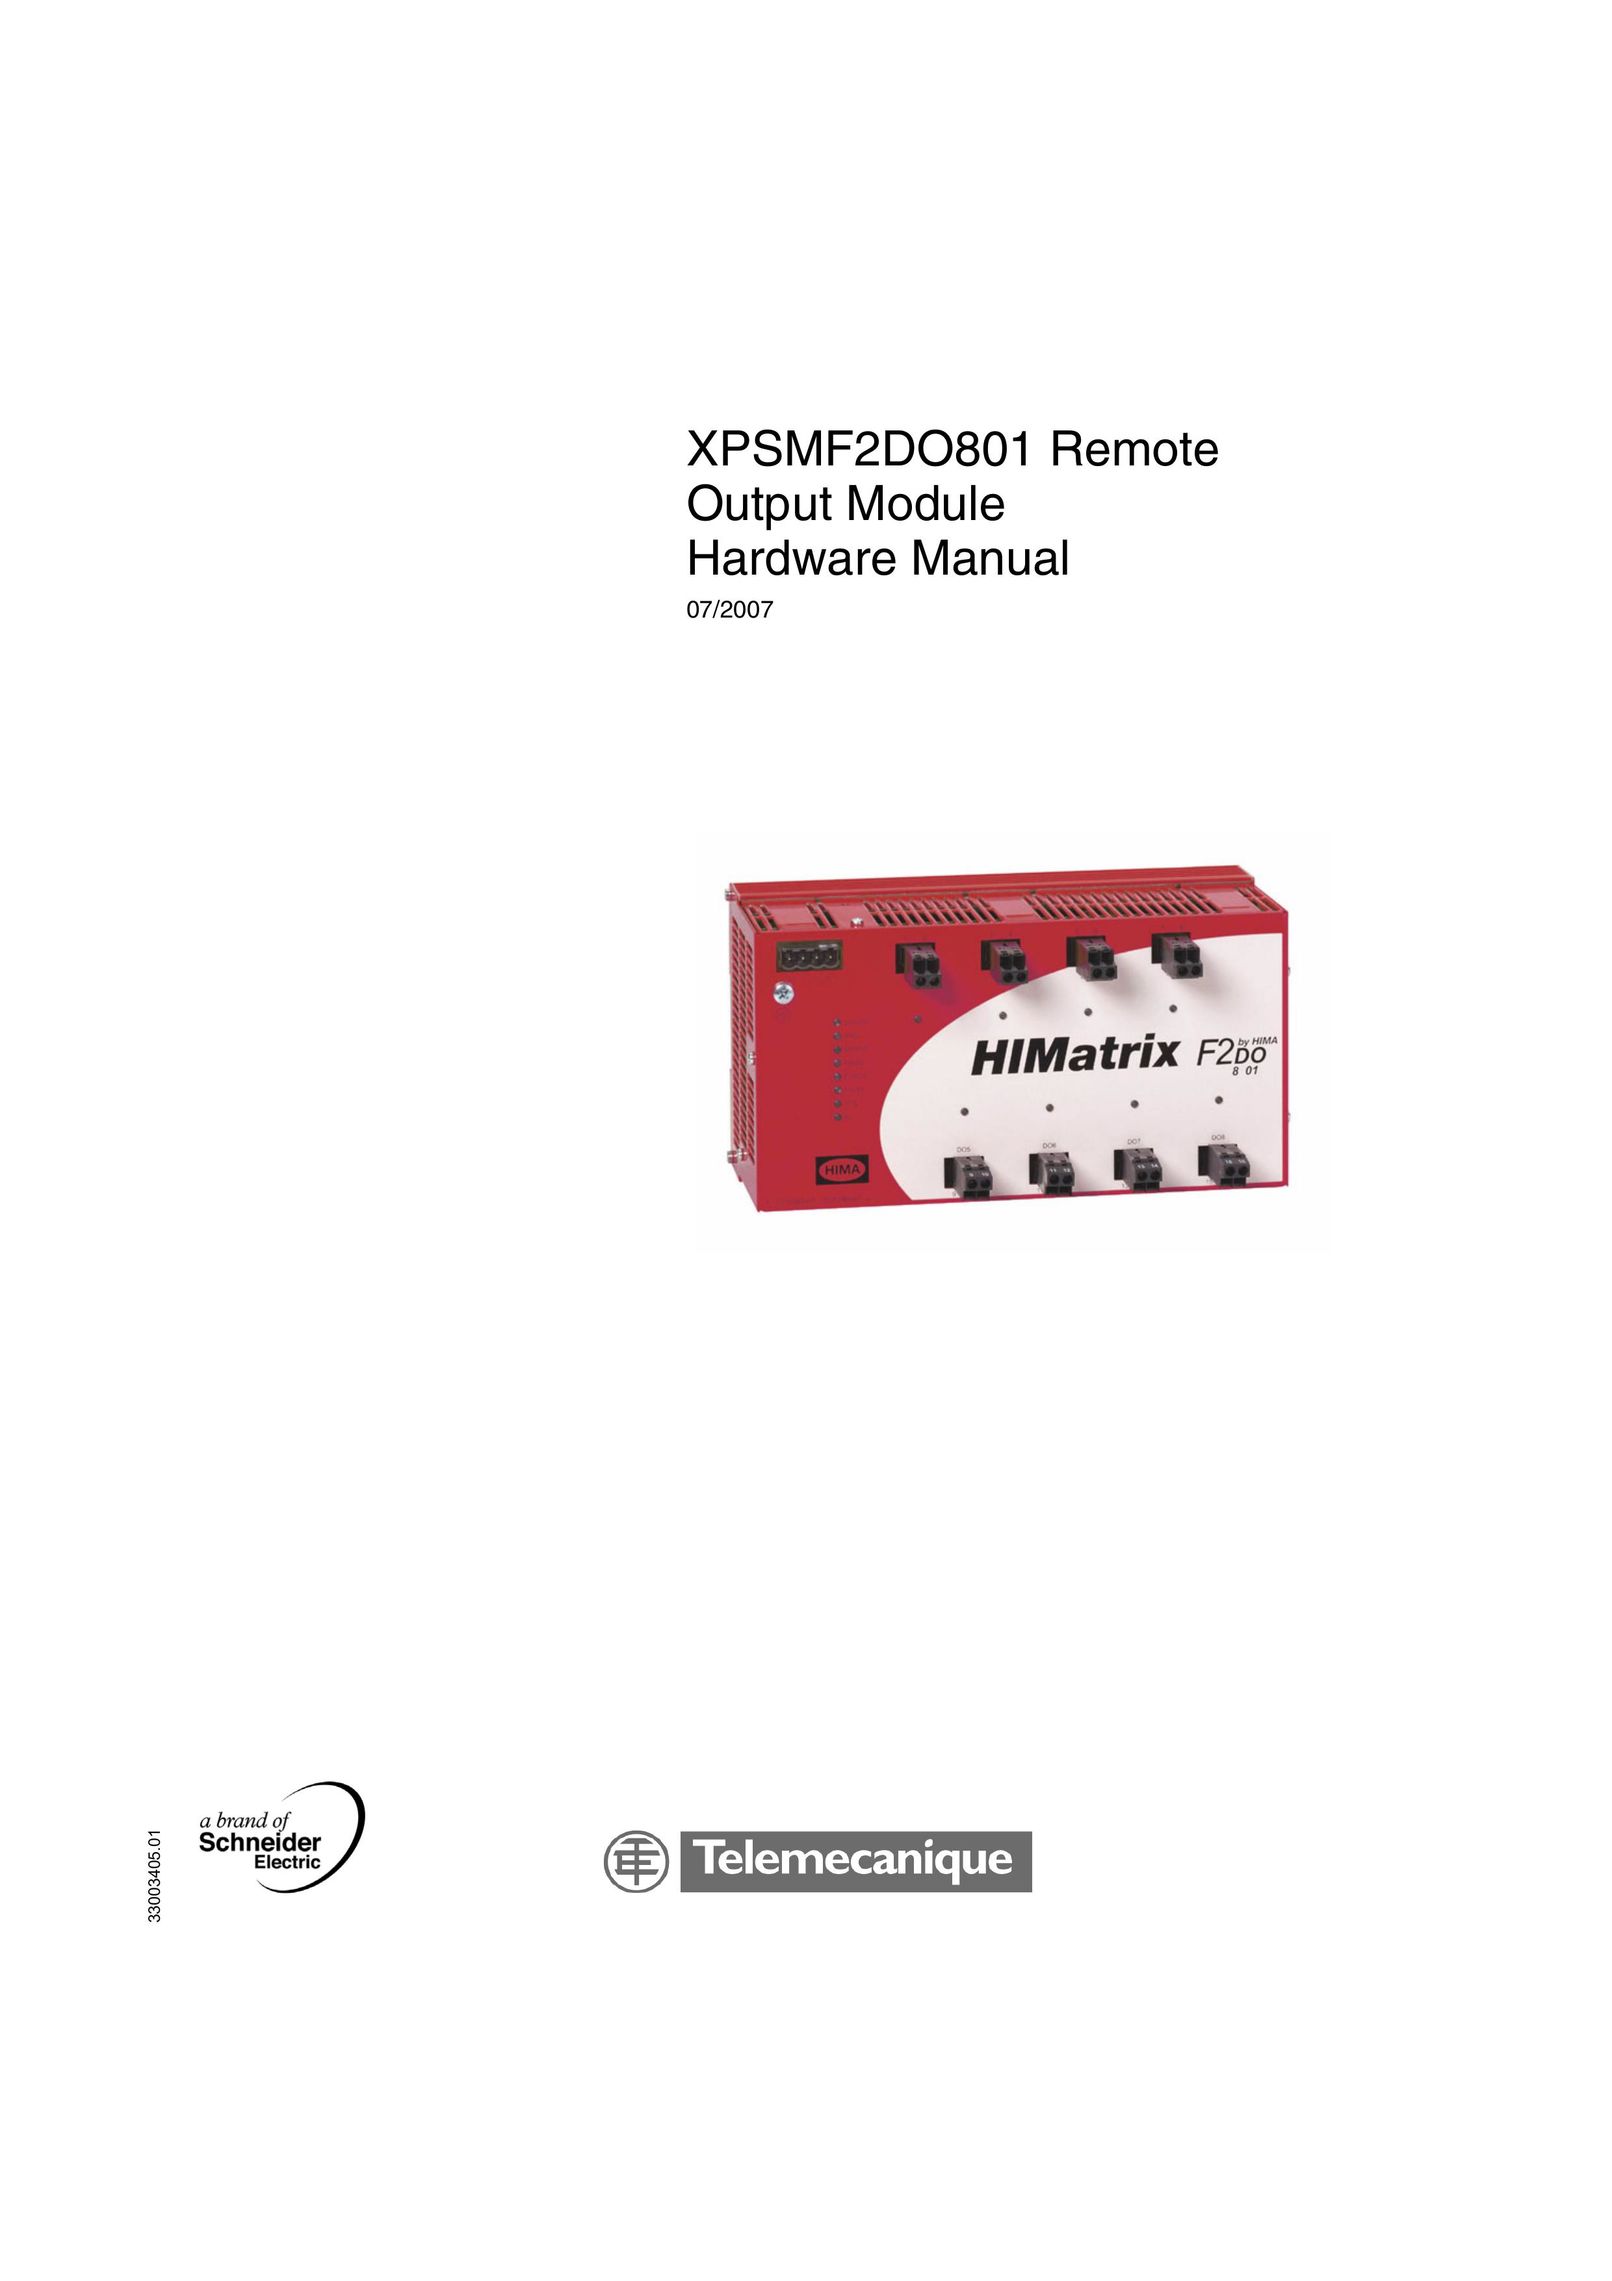 Schneider Electric XPSMF2DO801 Network Hardware User Manual